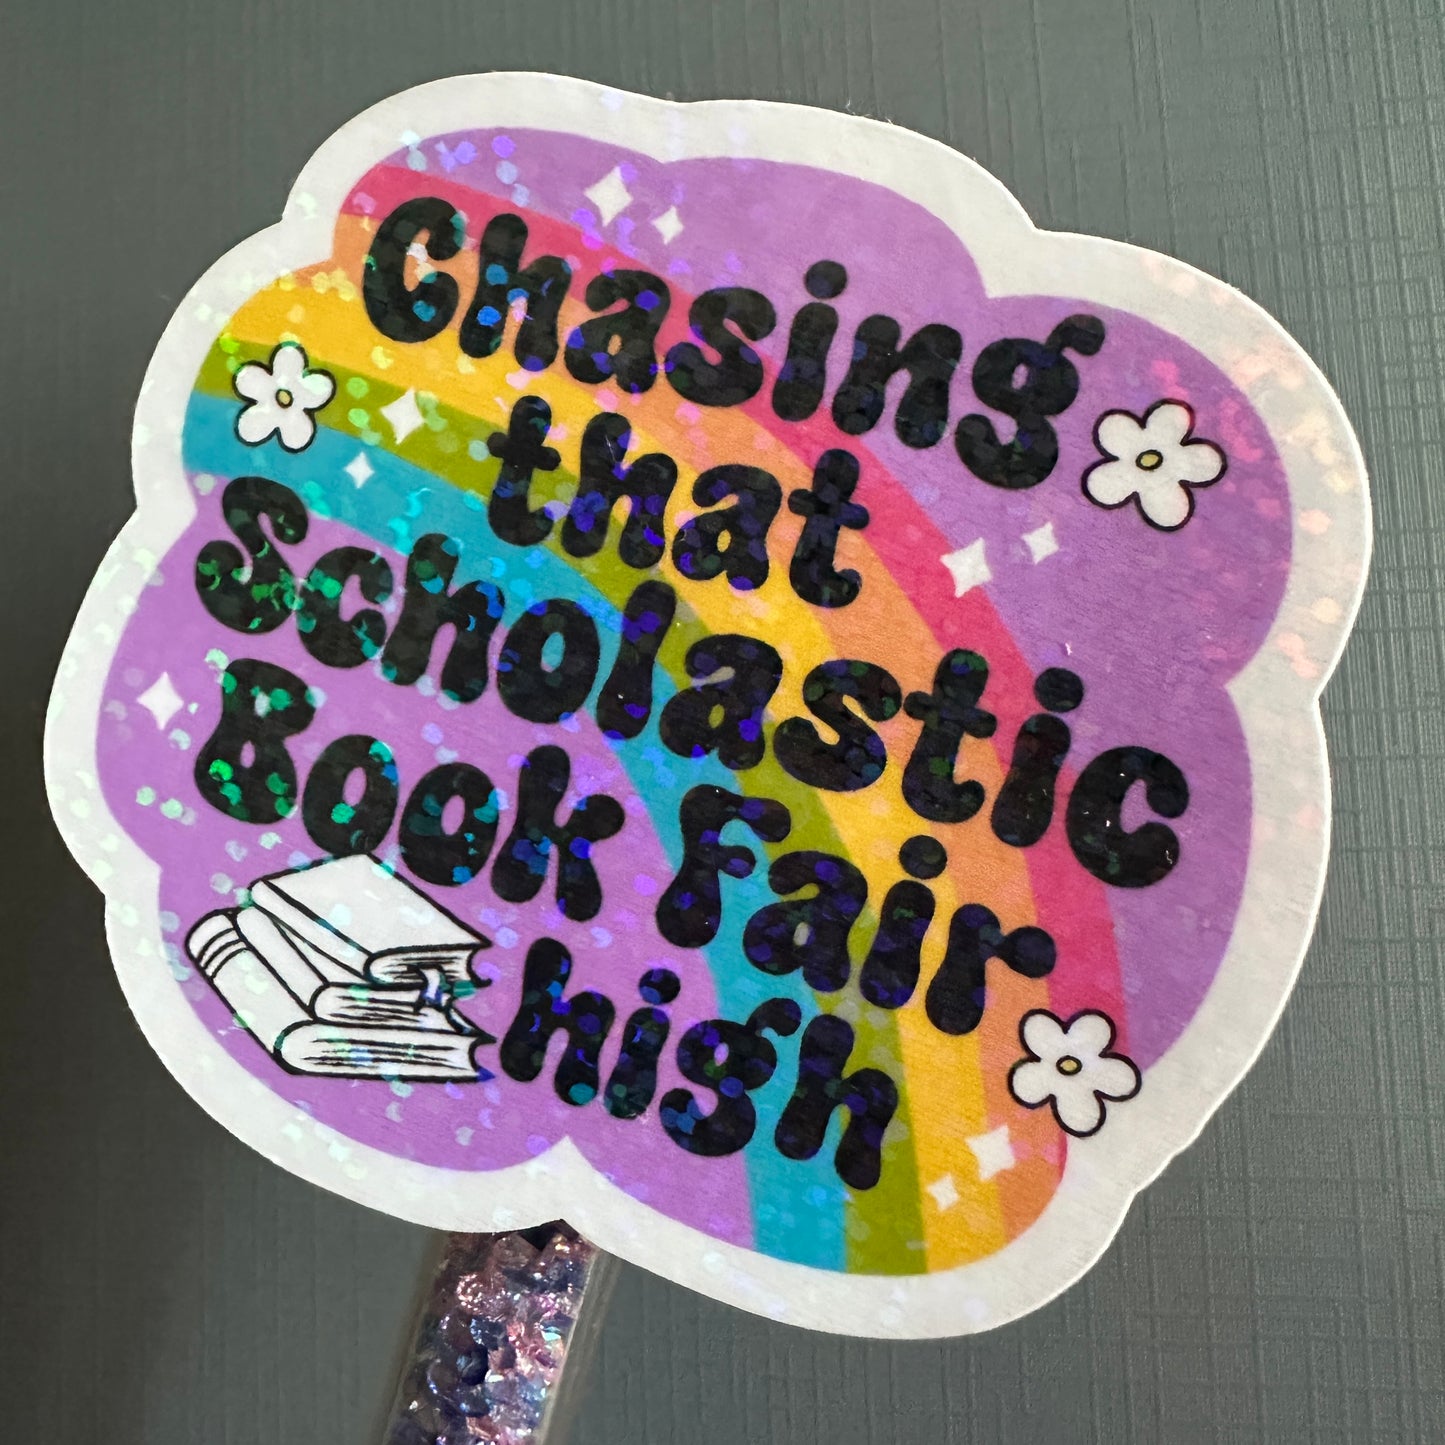 Scholastic Book Fair - Holo Overlay Sticker